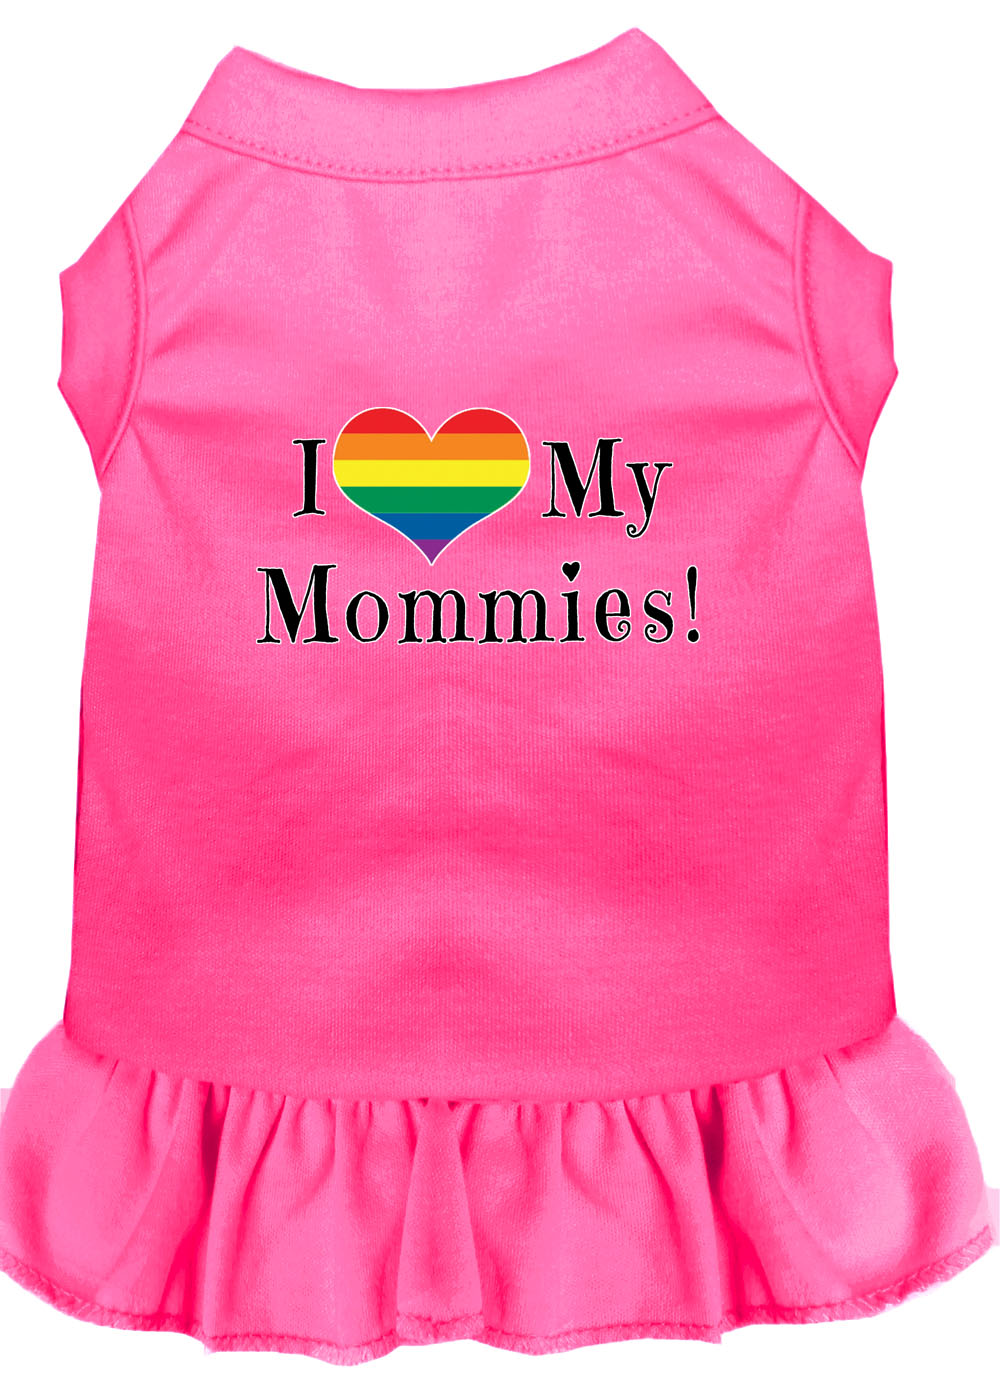 I Heart my Mommies Screen Print Dog Dress Bright Pink XS